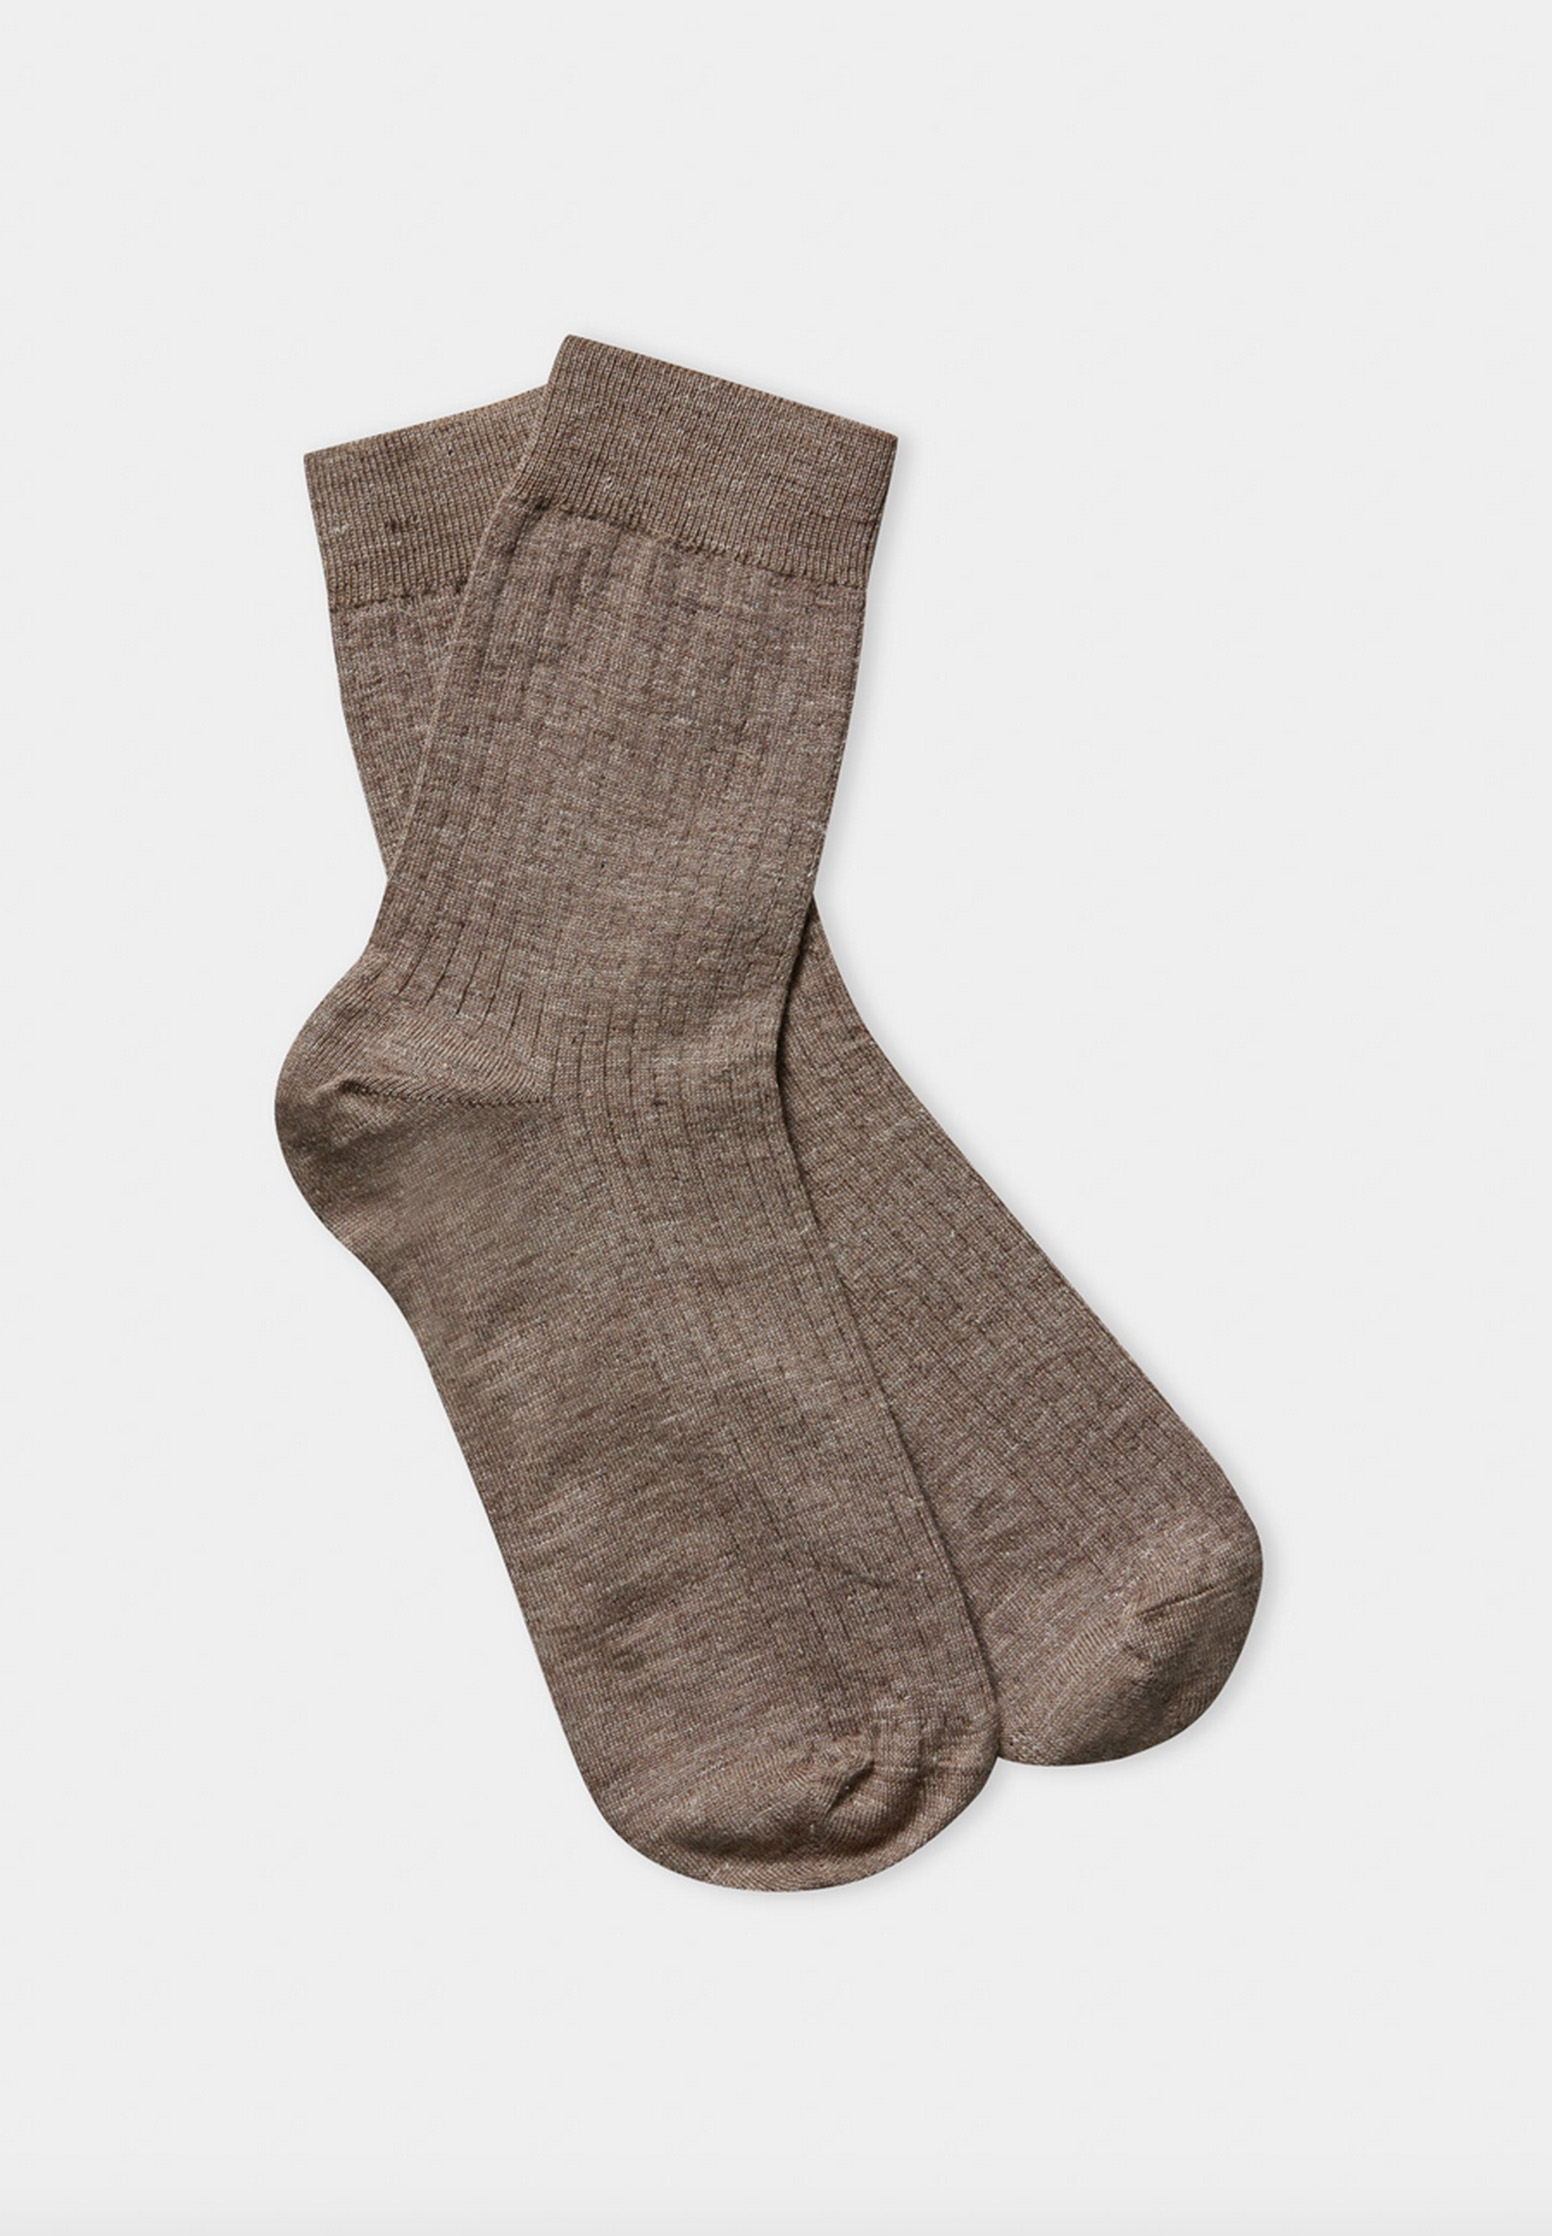 Bekleidung, Strumpfwaren, Socke